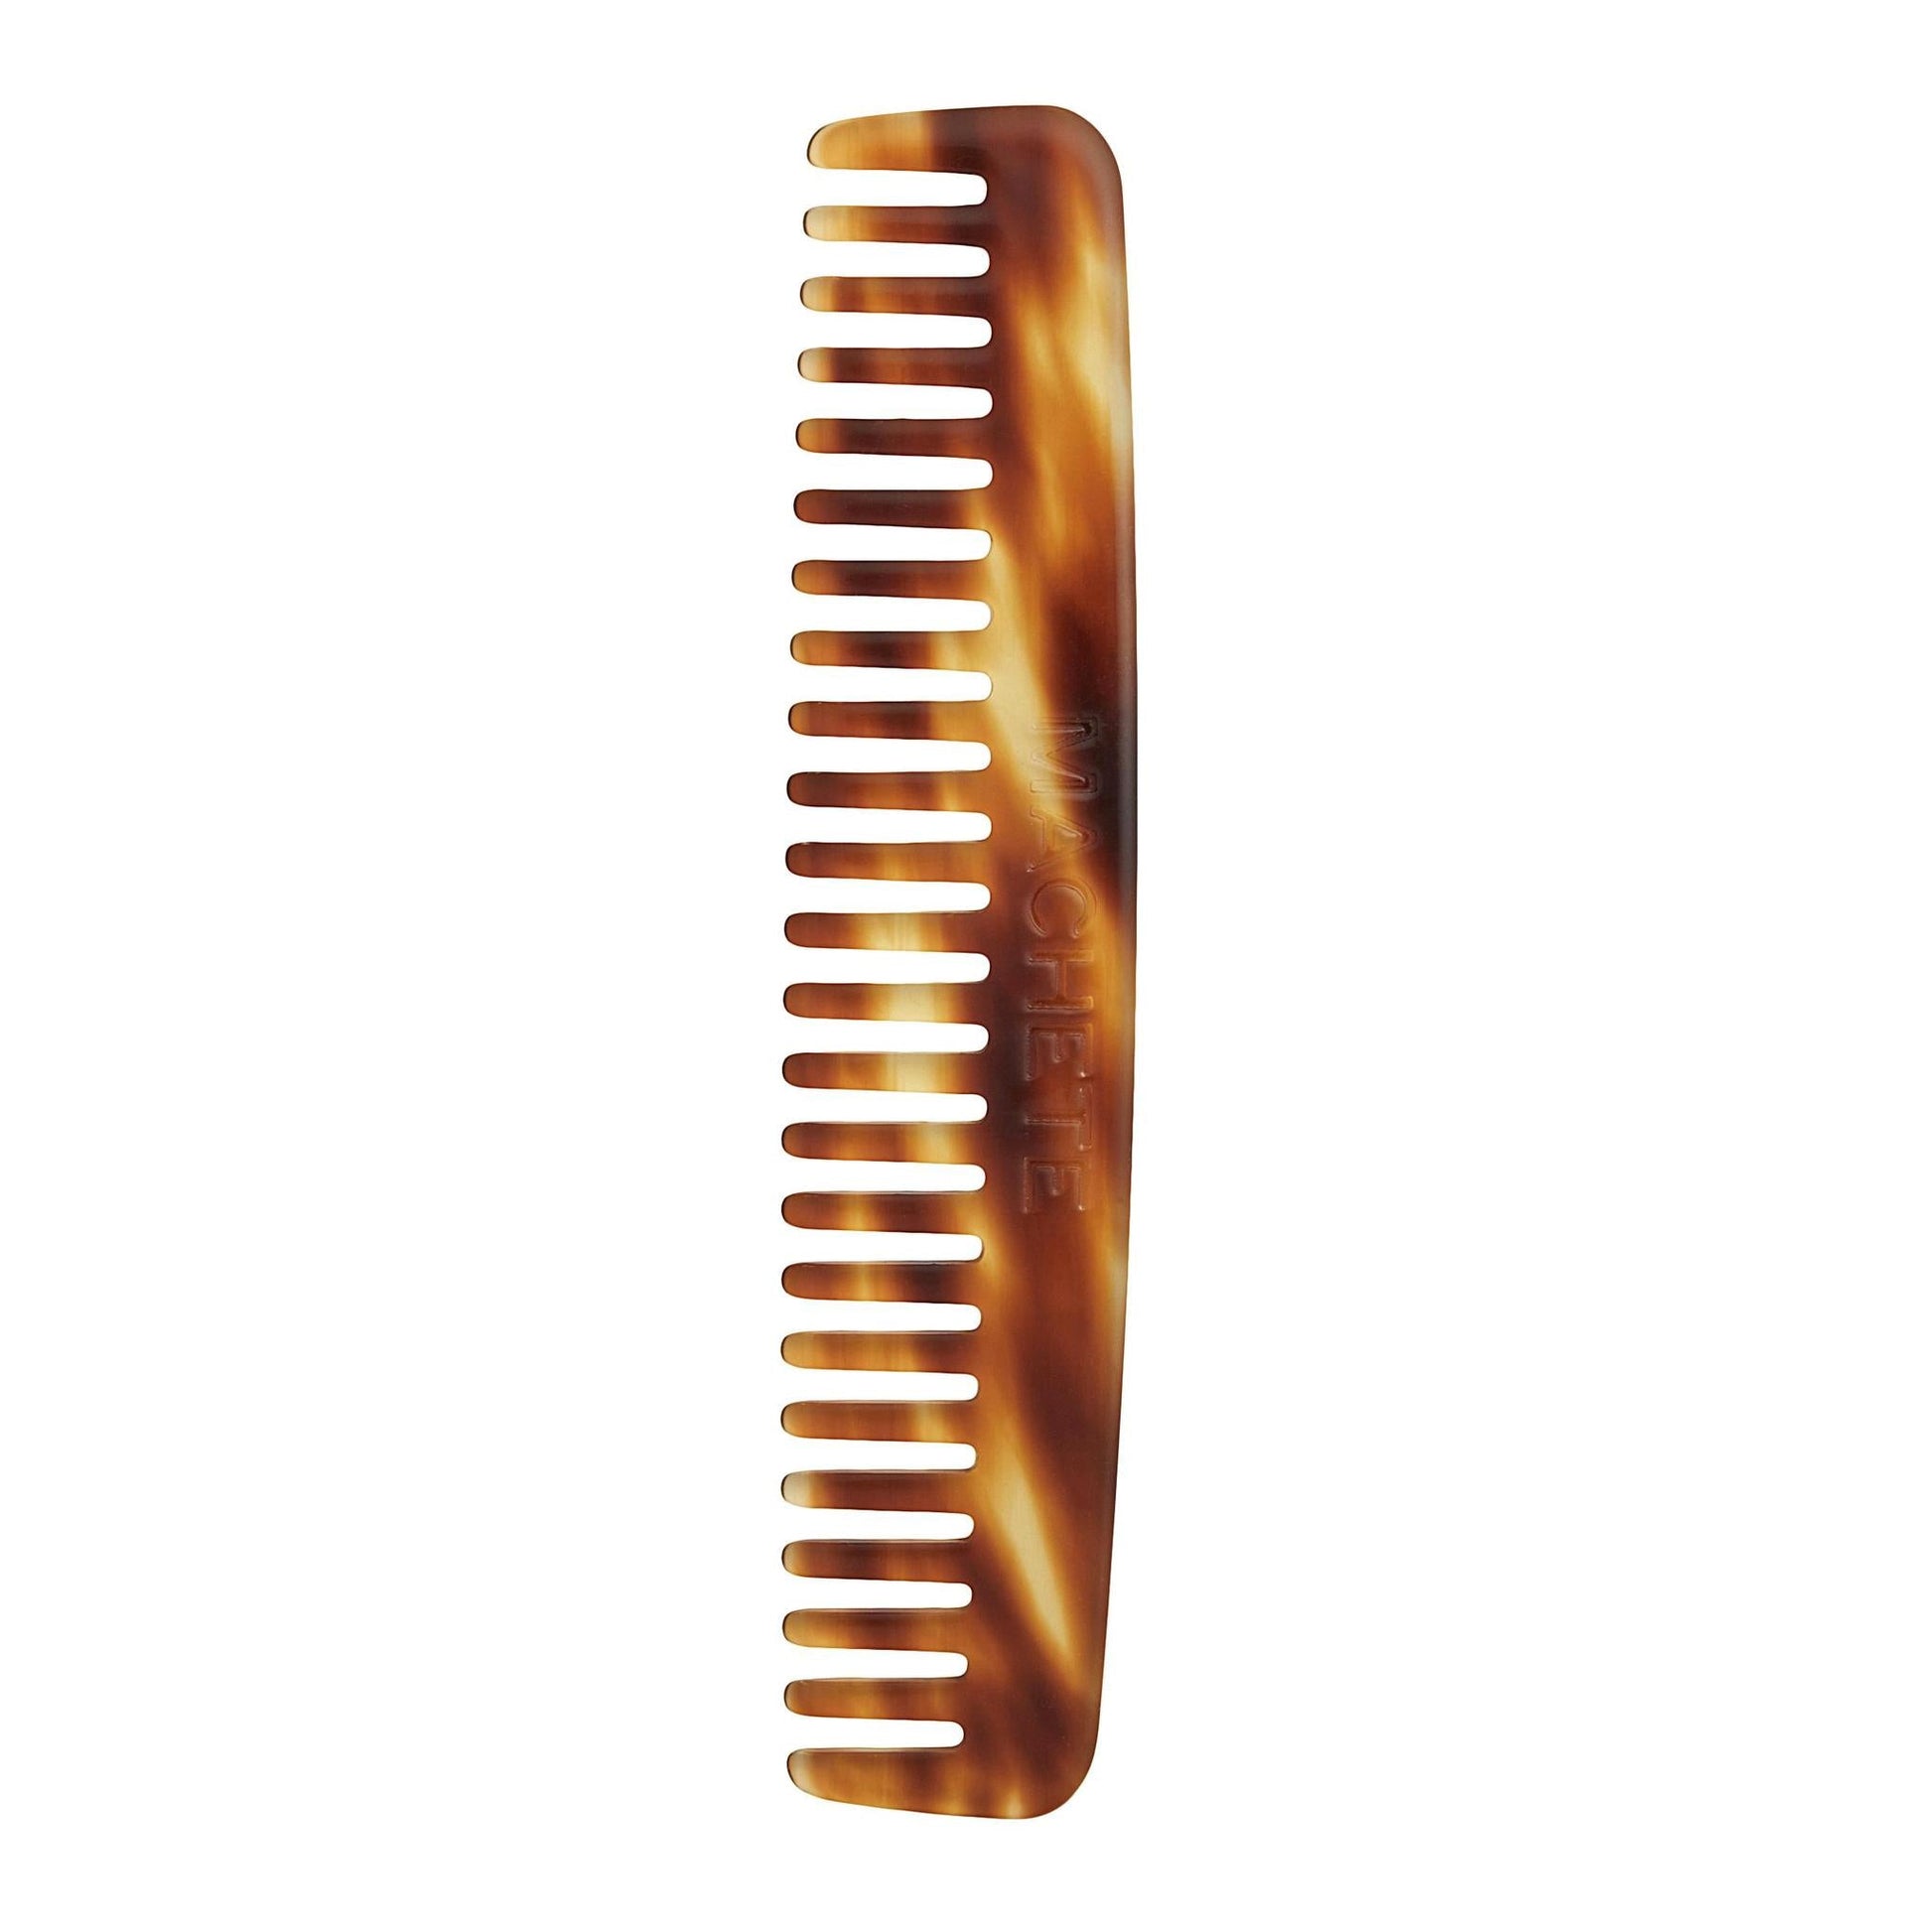 MACHETE No. 3 Comb in Walnut